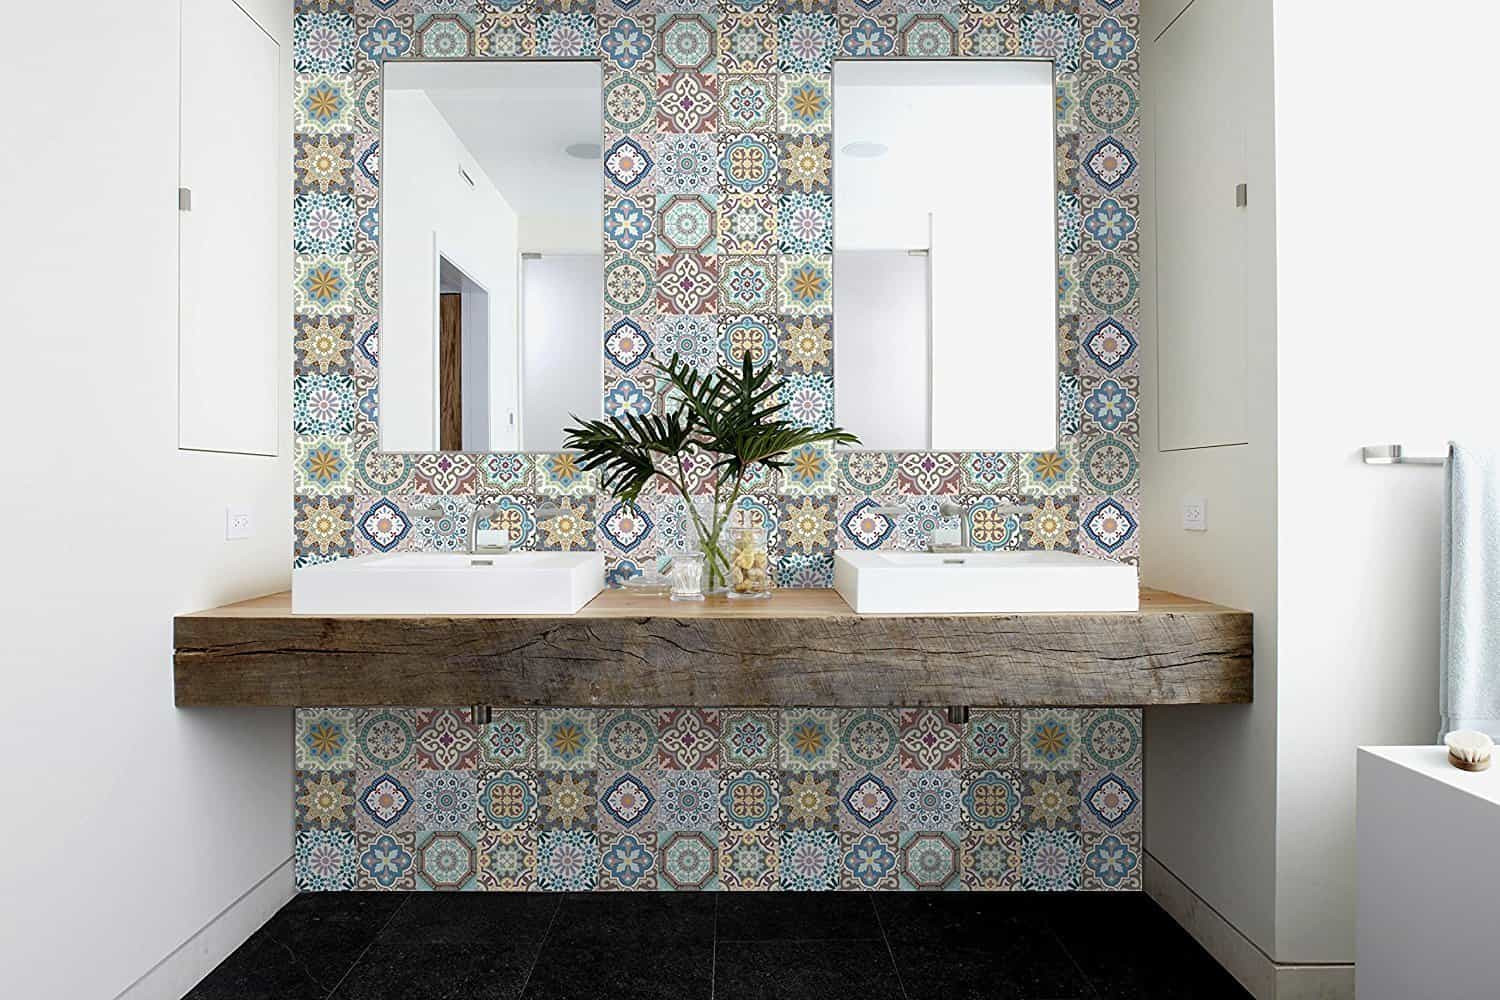 Vinyl Bathroom Wall Tiles
 Can You Use Vinyl Flooring on Bathroom Walls [ANSWERED W